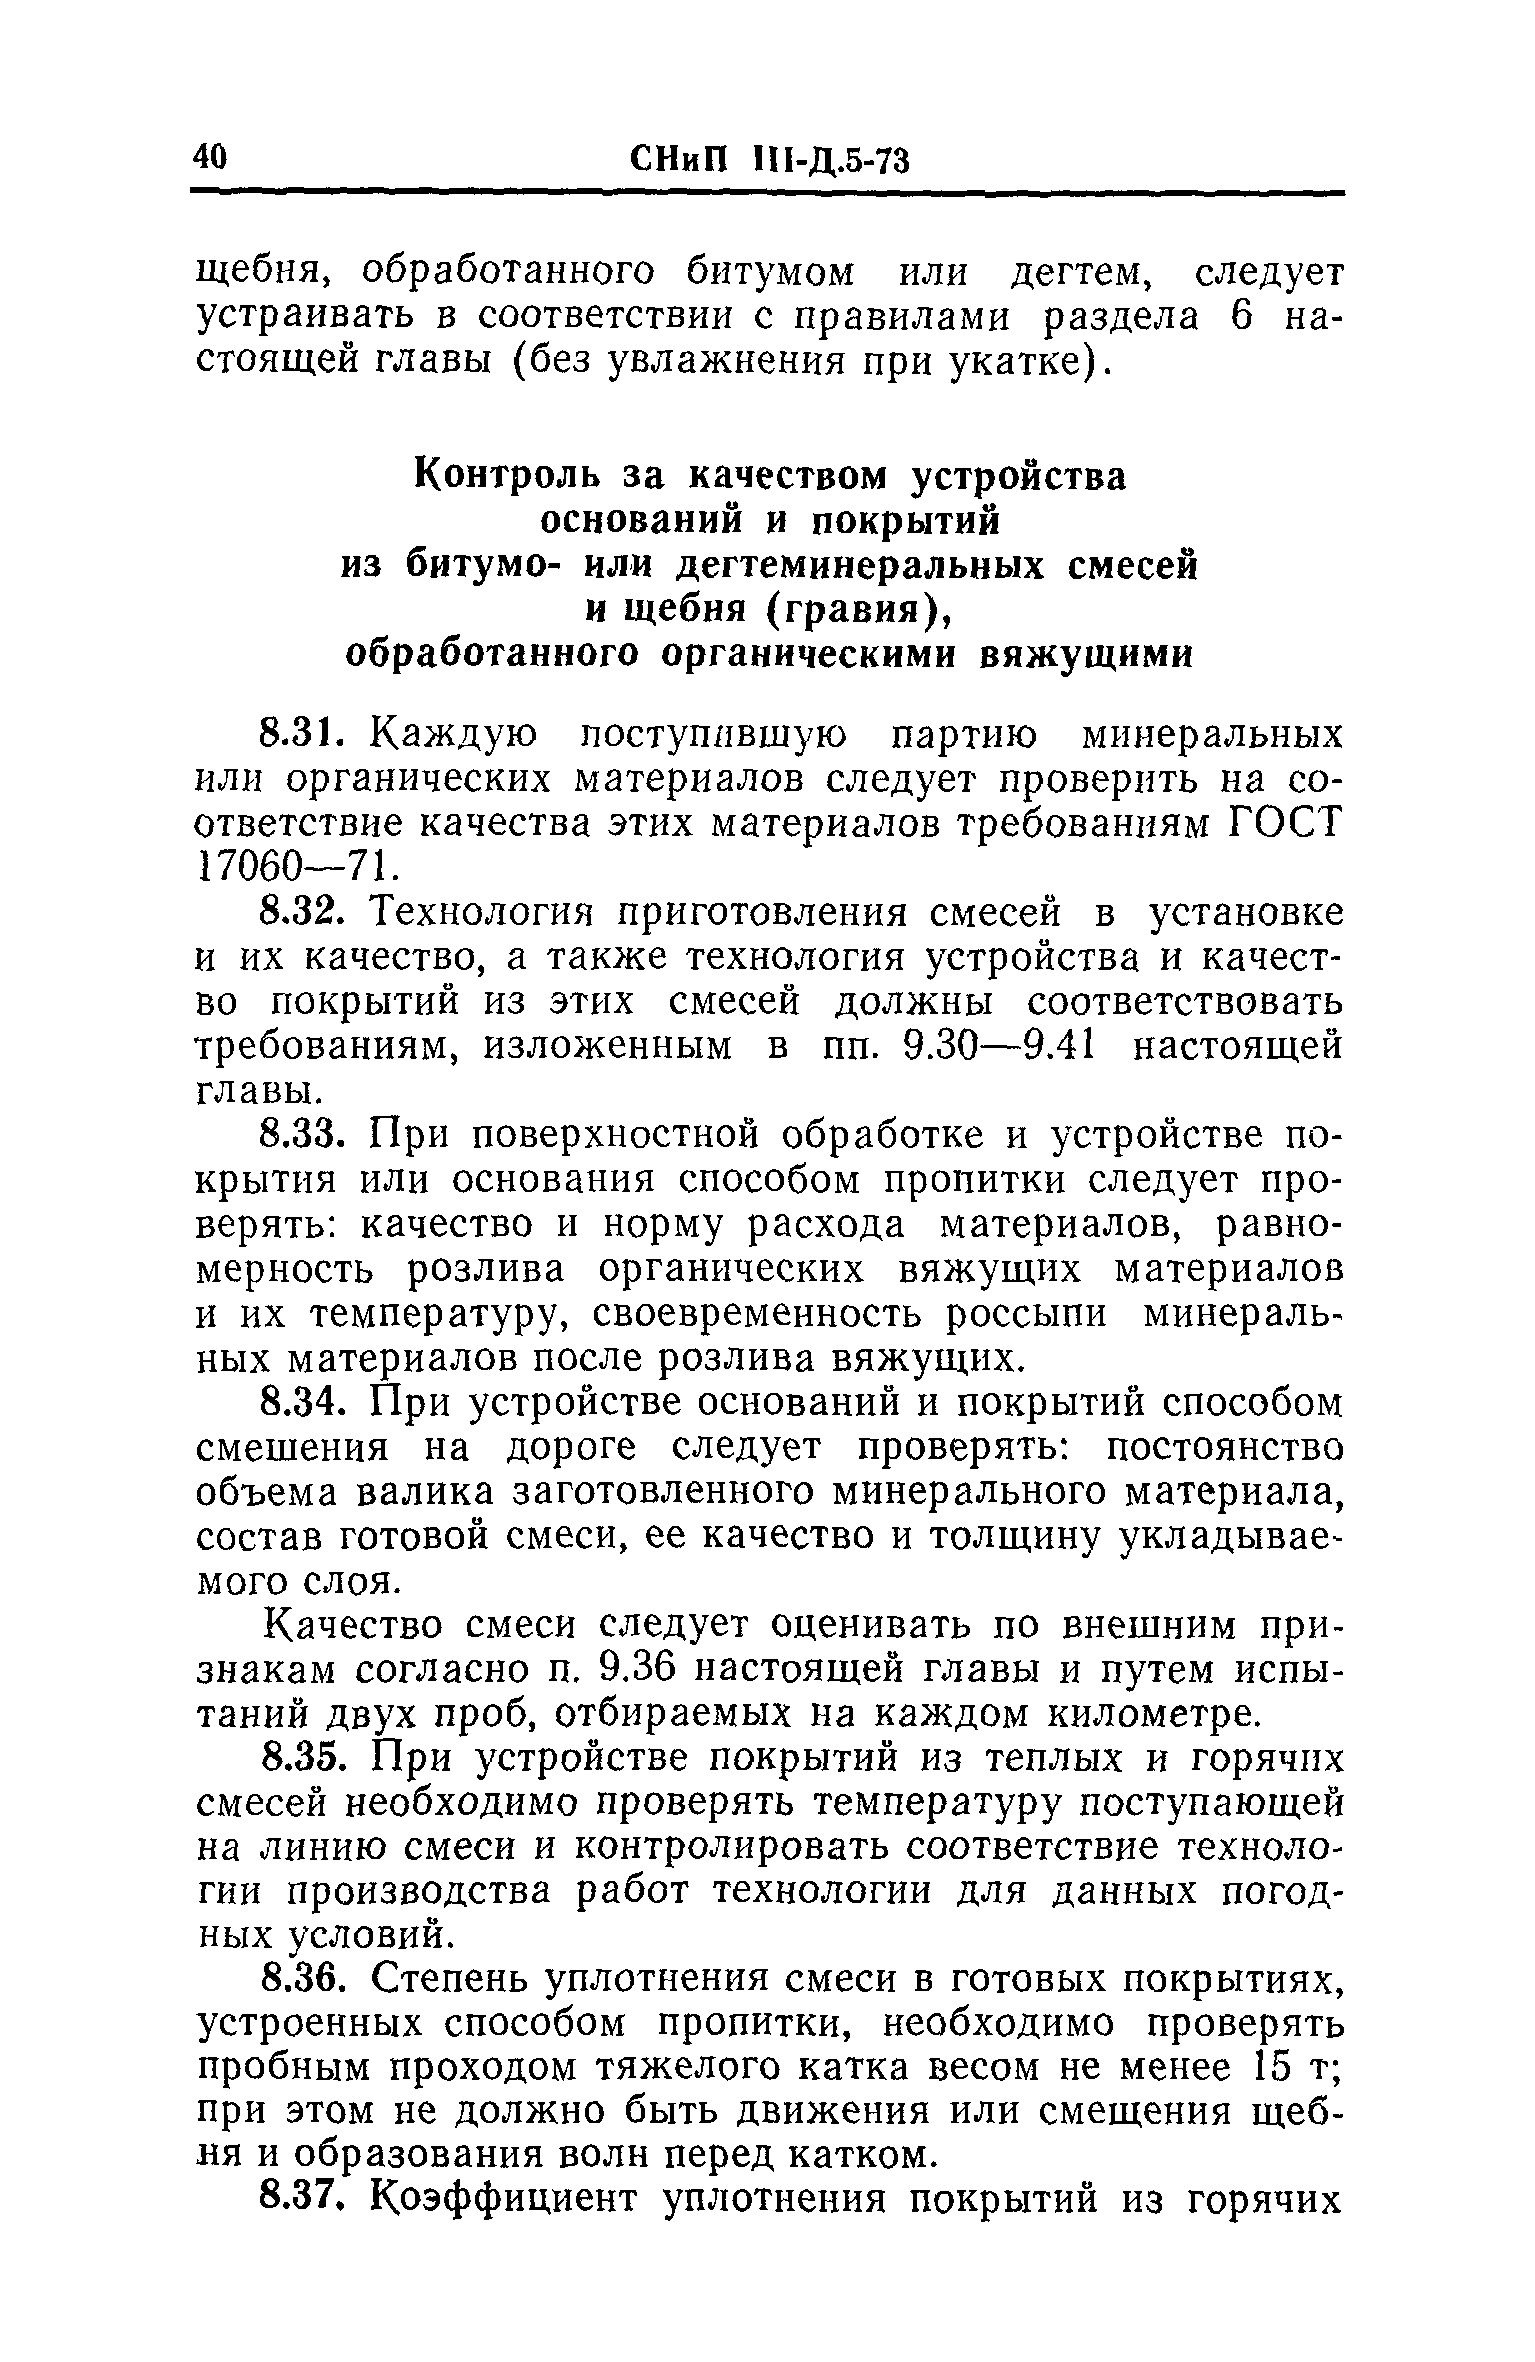 СНиП III-Д.5-73